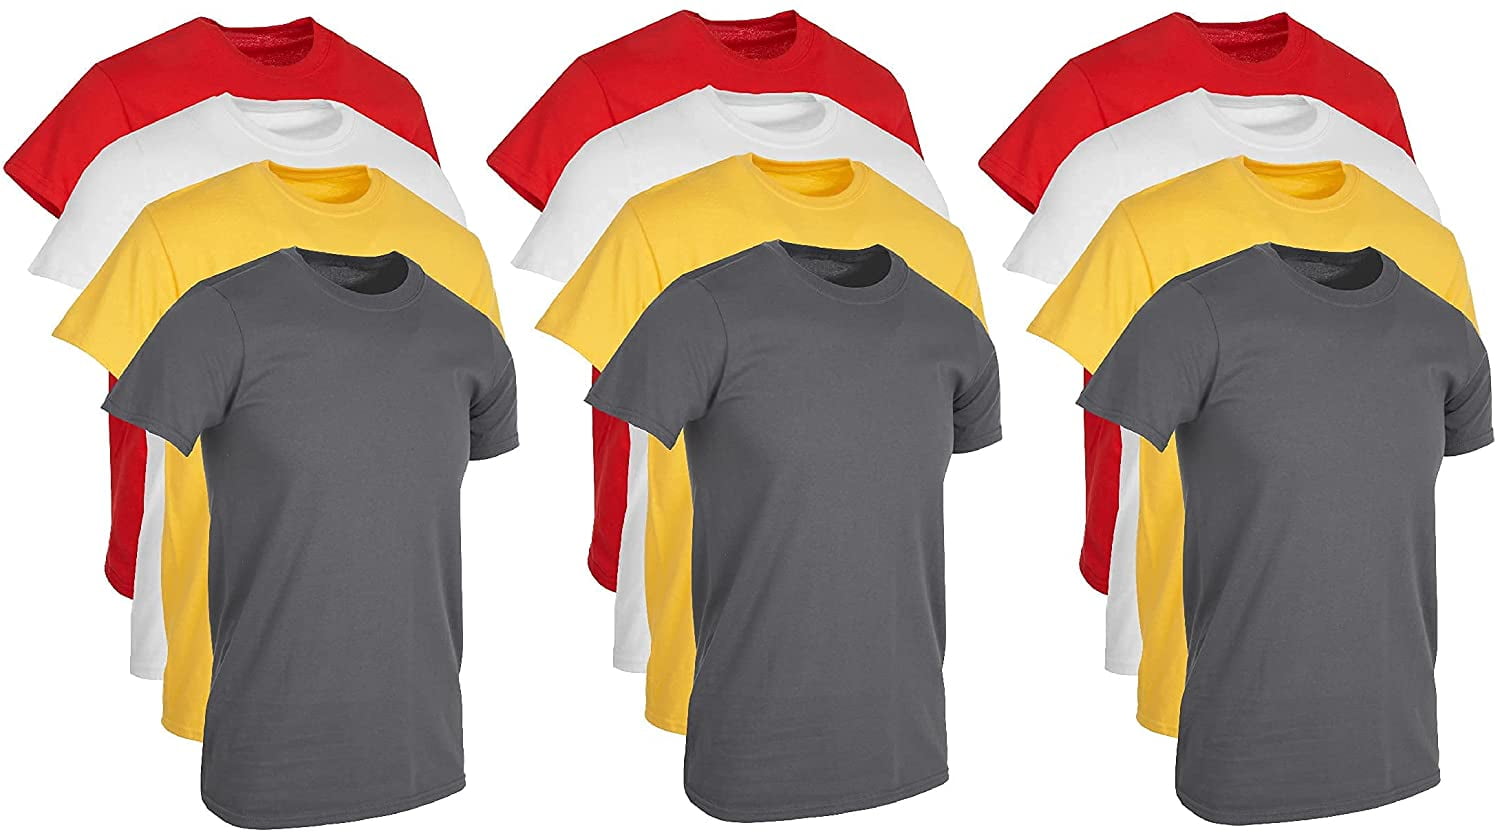 SOCKS'NBULK T-Shirts - Size 7X - Plus Size Men's Solid Colors Cotton  T-Shirts Short Sleeve Lightweight Big Tall Tees, Bulk 